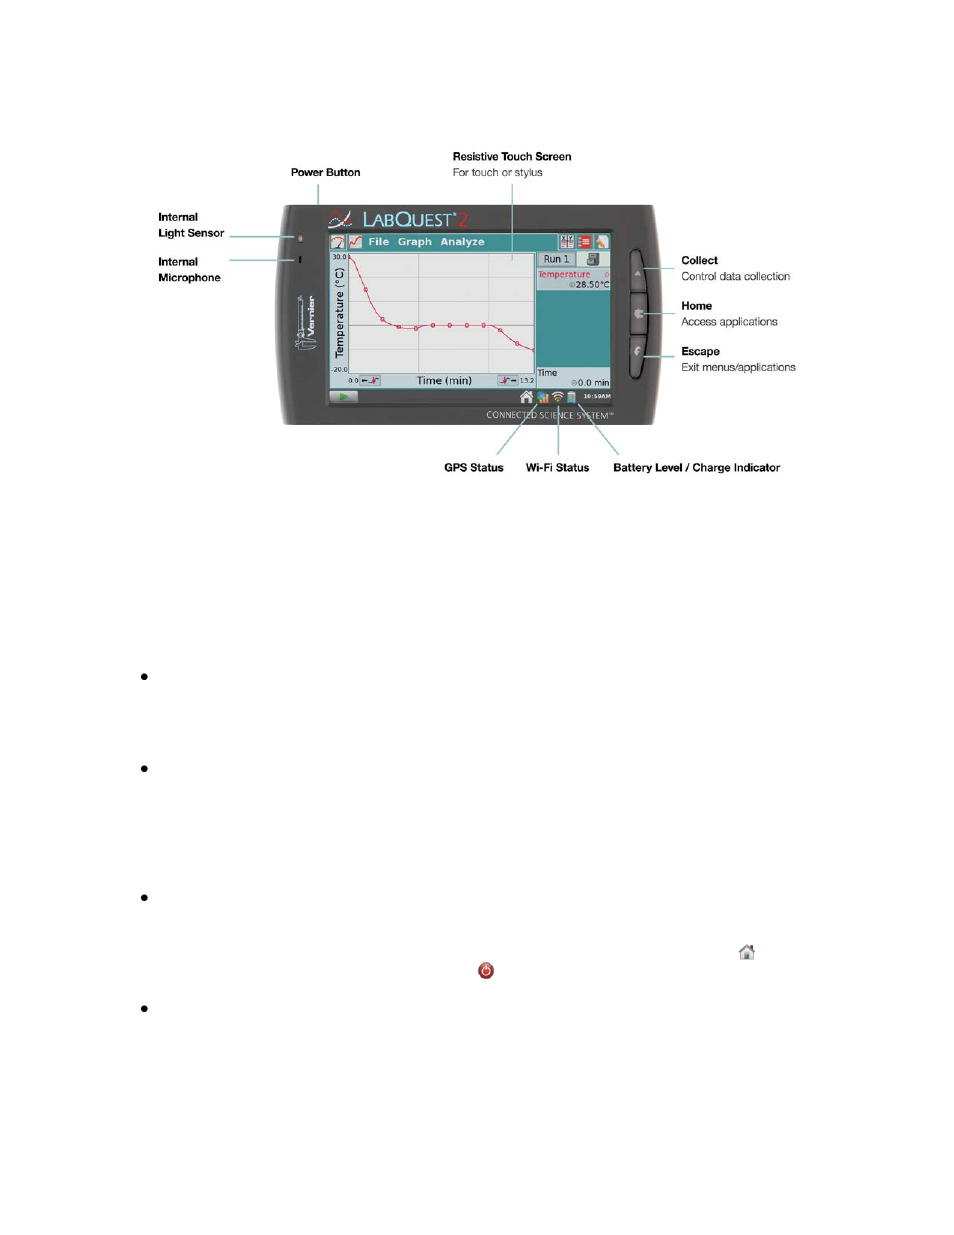 Labquest 2 hardware, Power button | Vernier LabQuest 2 User Manual | Page 8  / 56